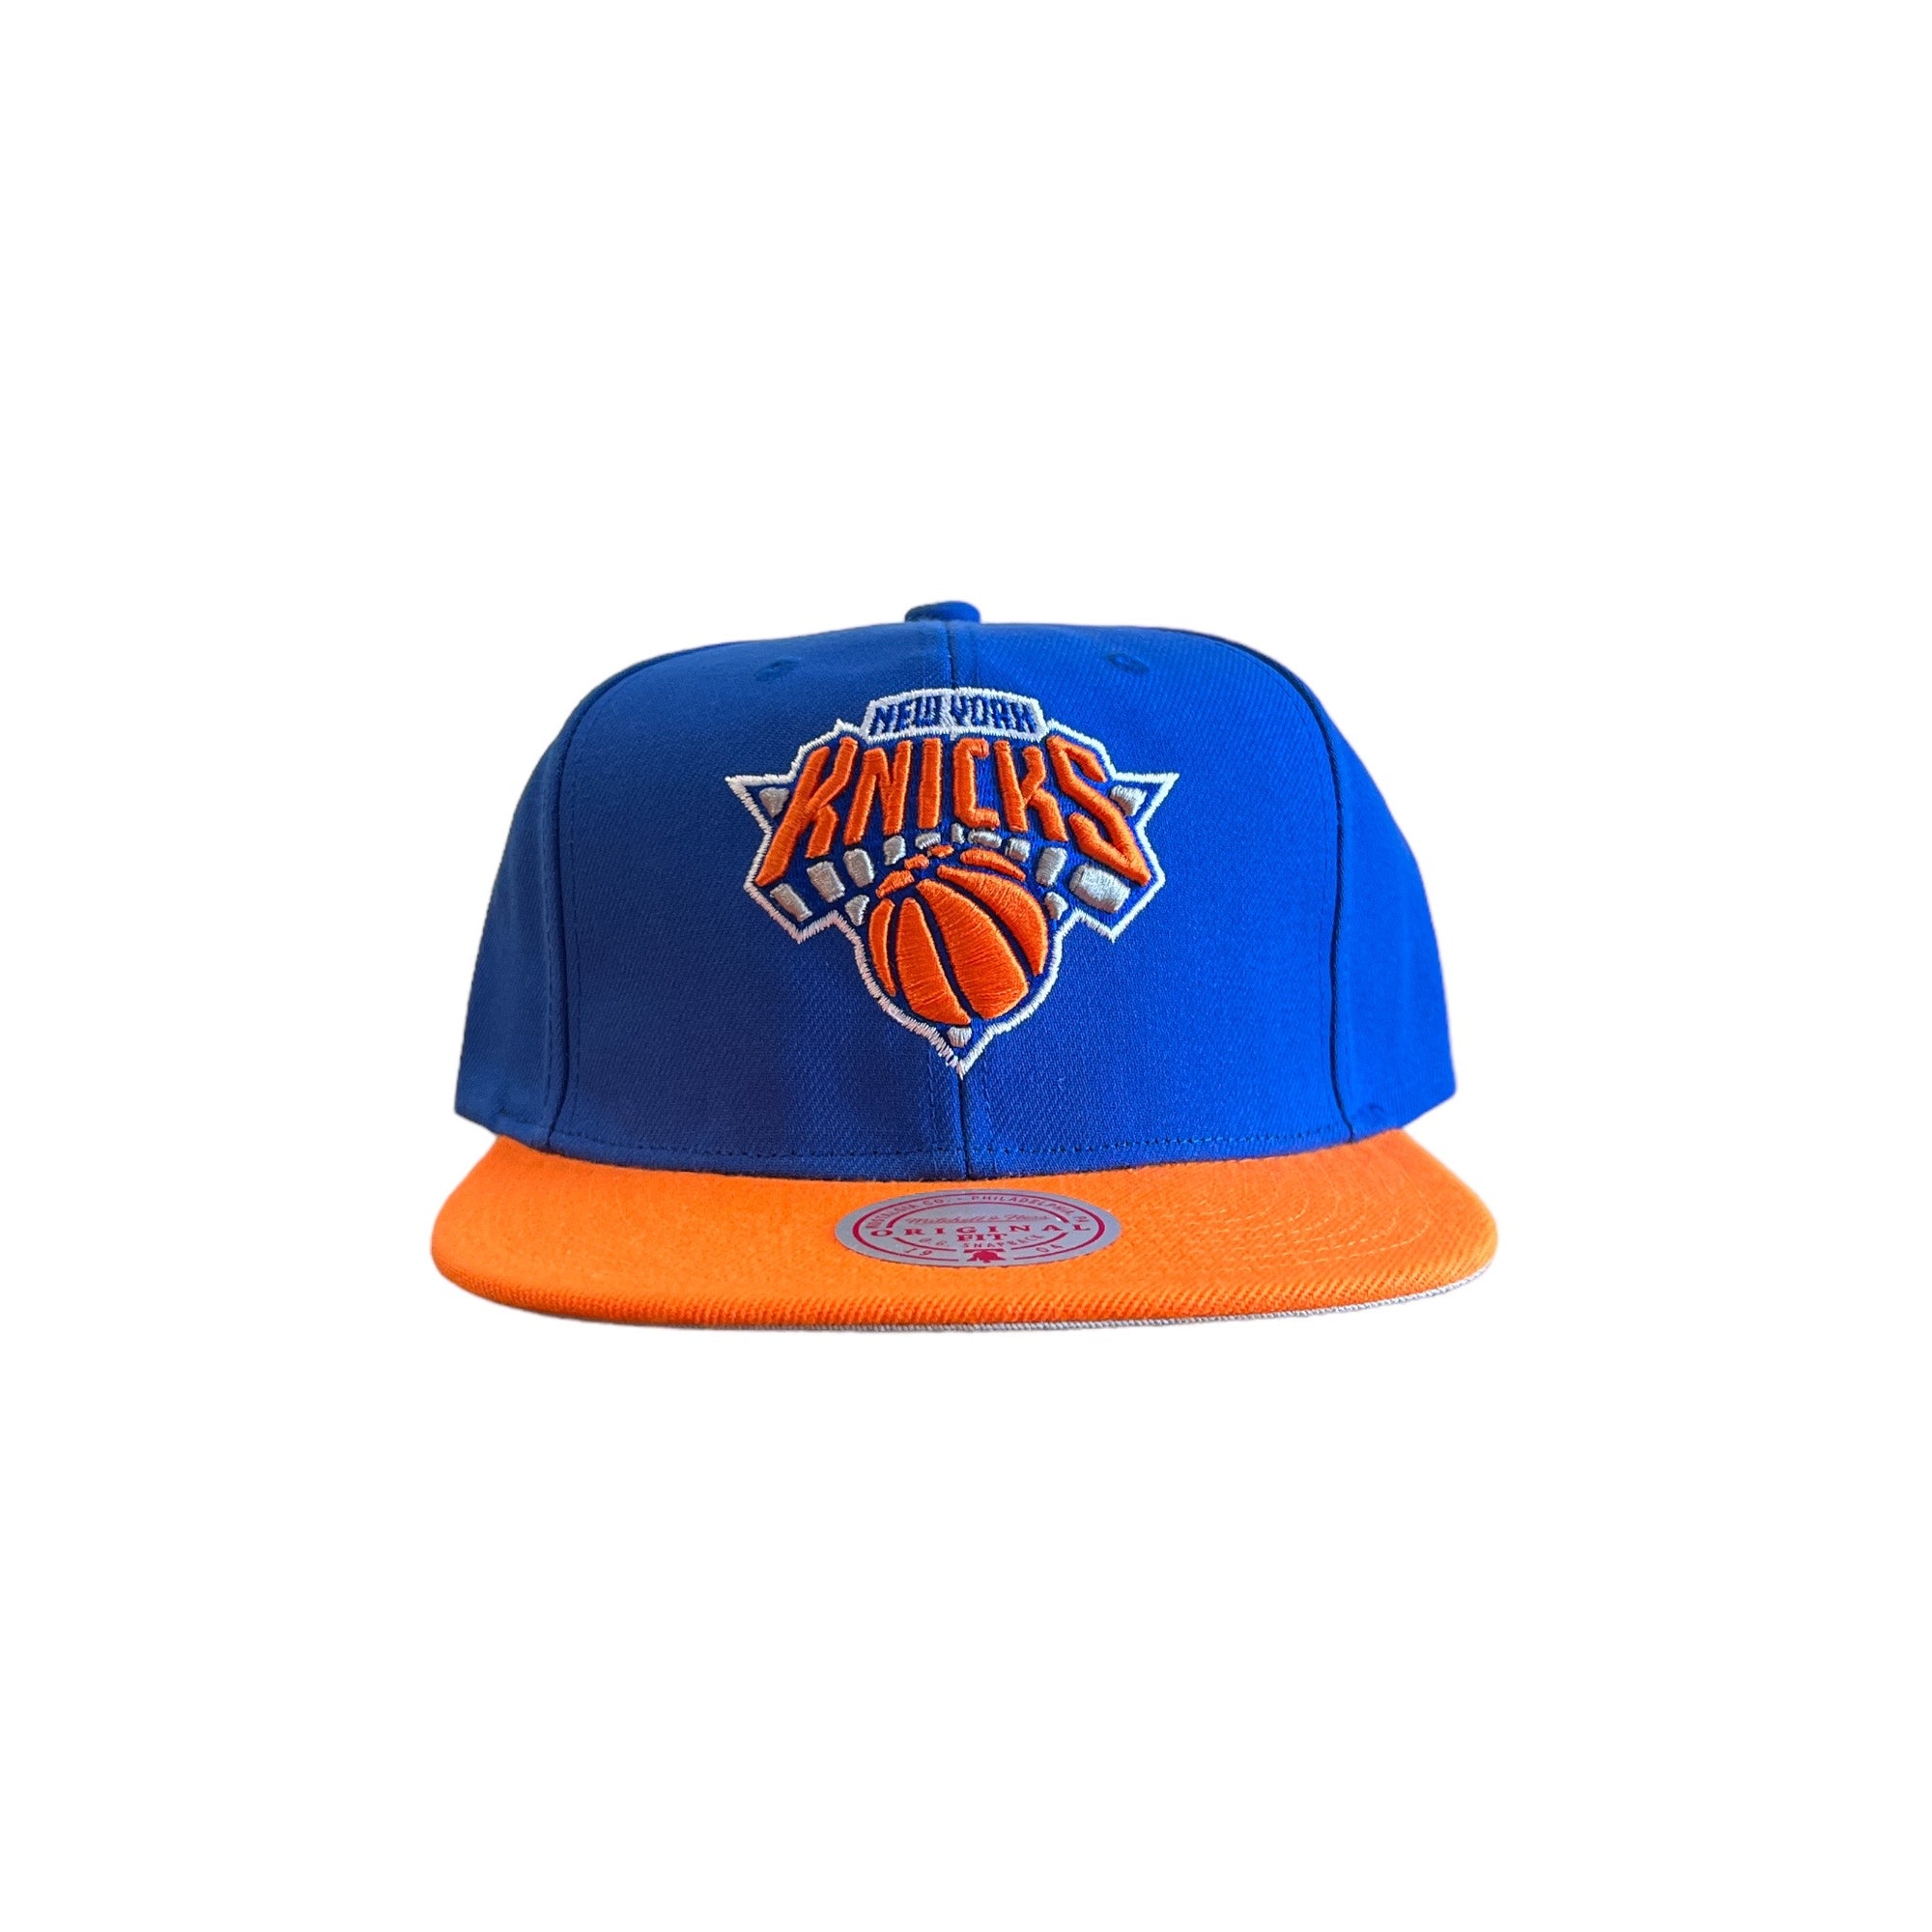 New York Knicks Mitchell and Ness Snapback